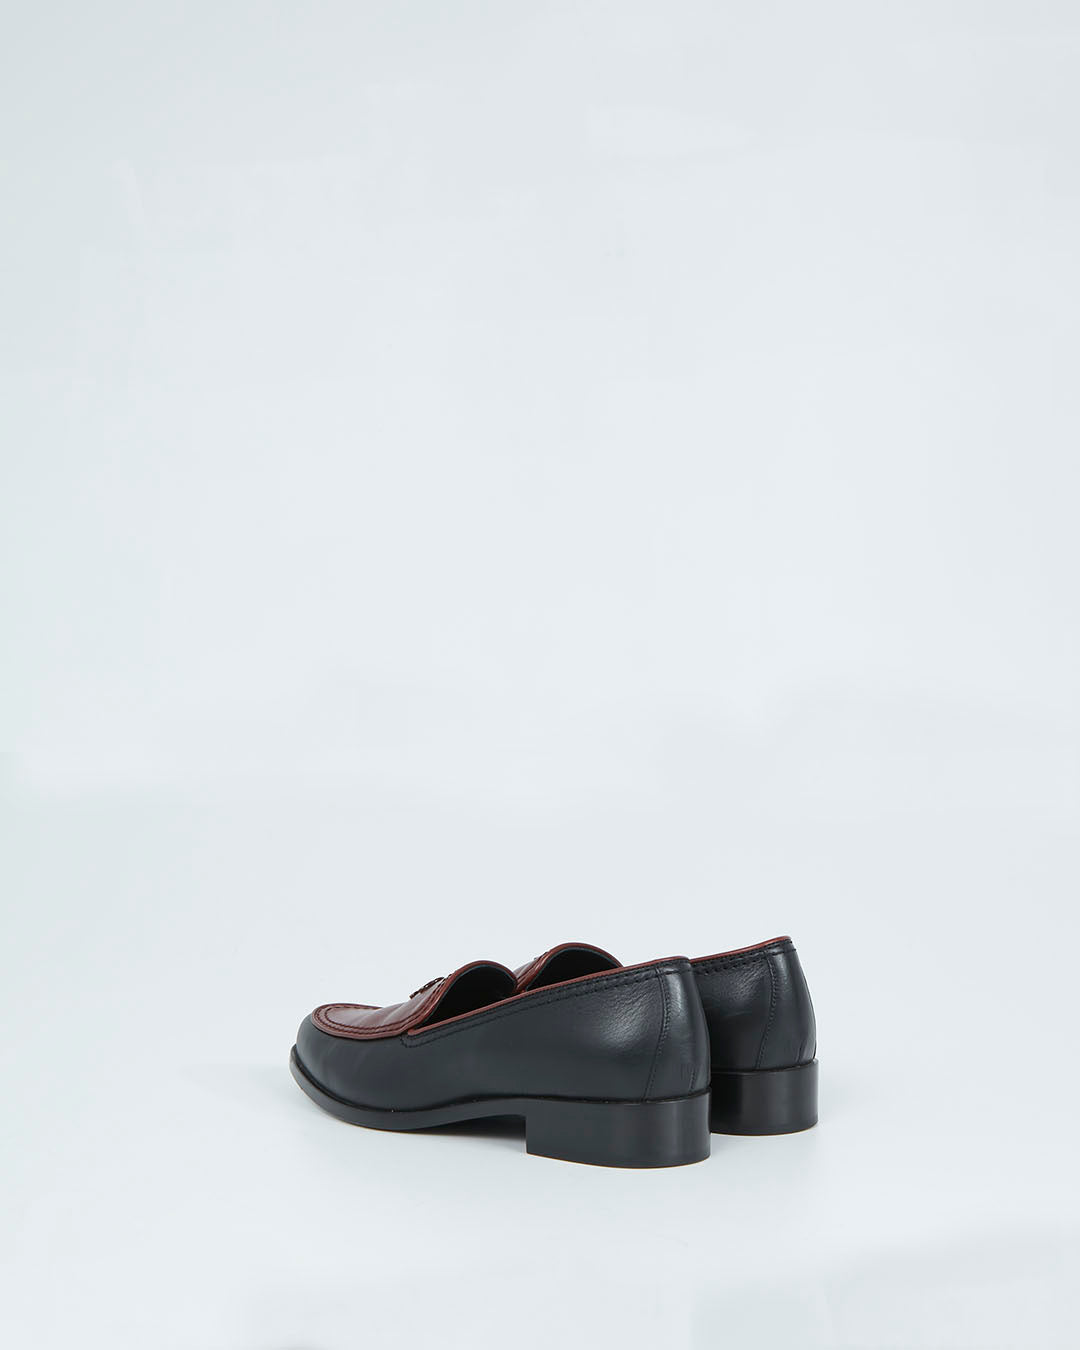 Chanel Brown/Black Leather CC Logo Loafer - 37